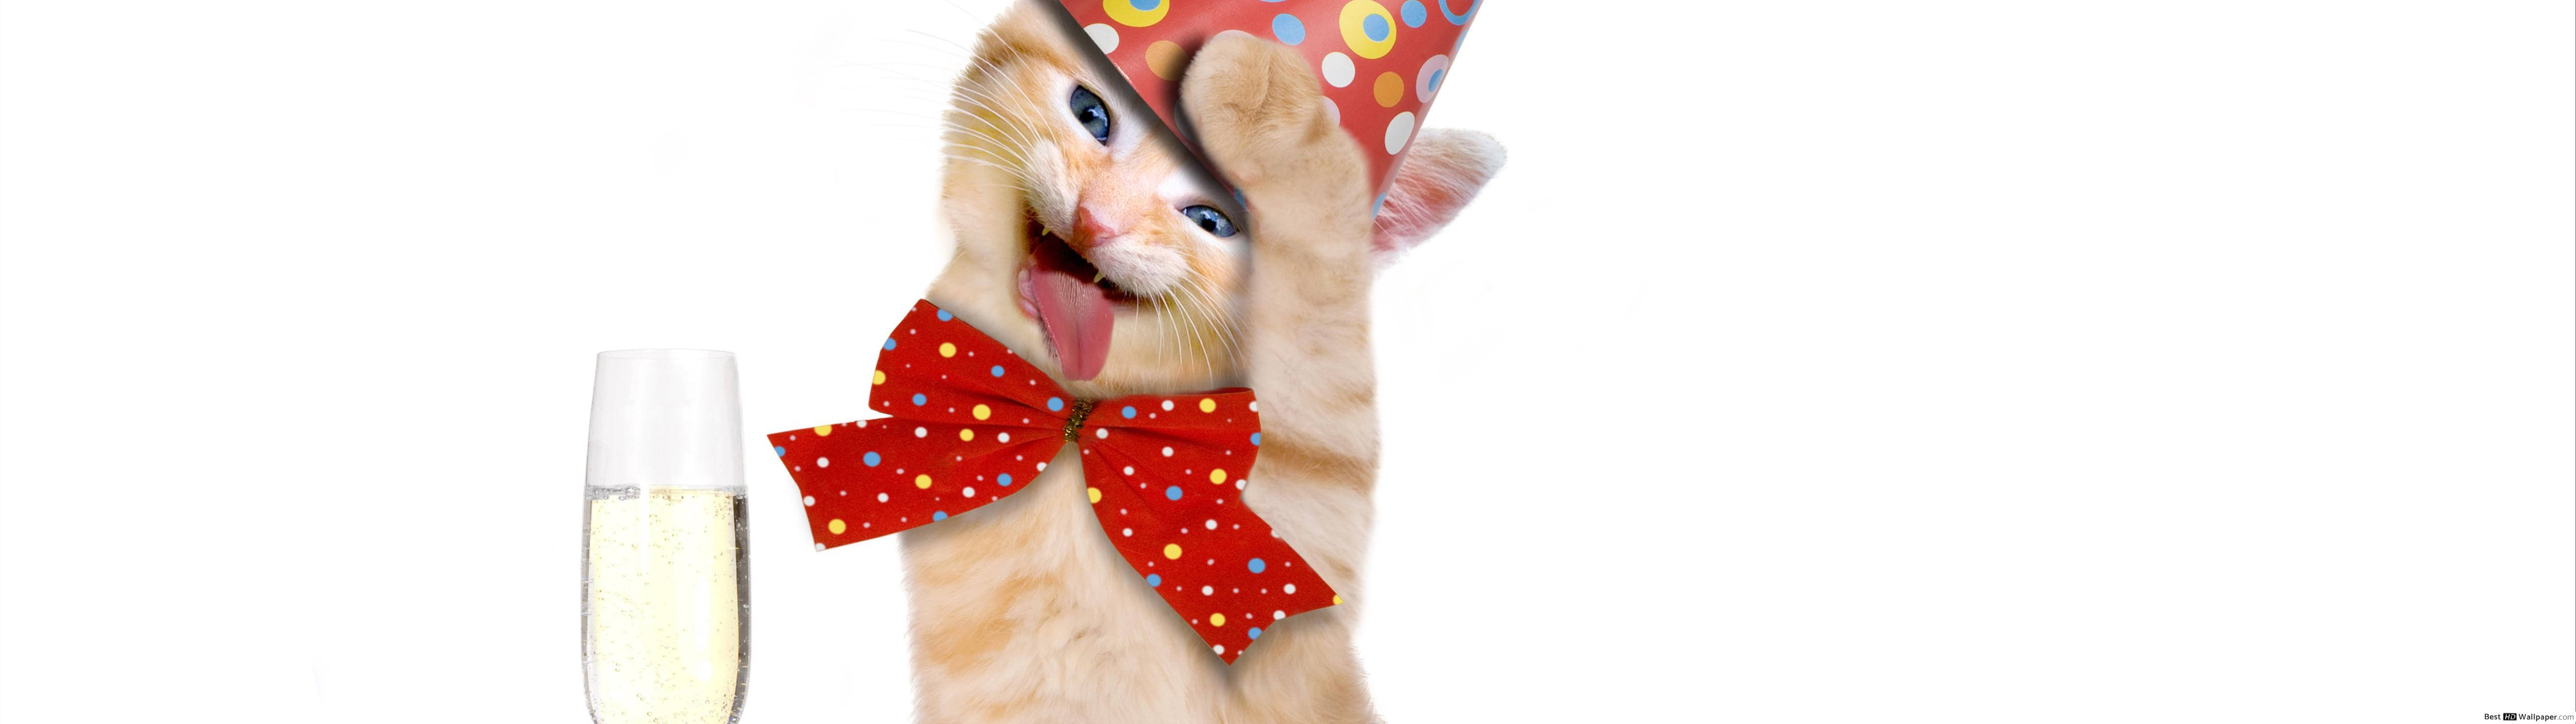 Cute Party Cat Wallpaper